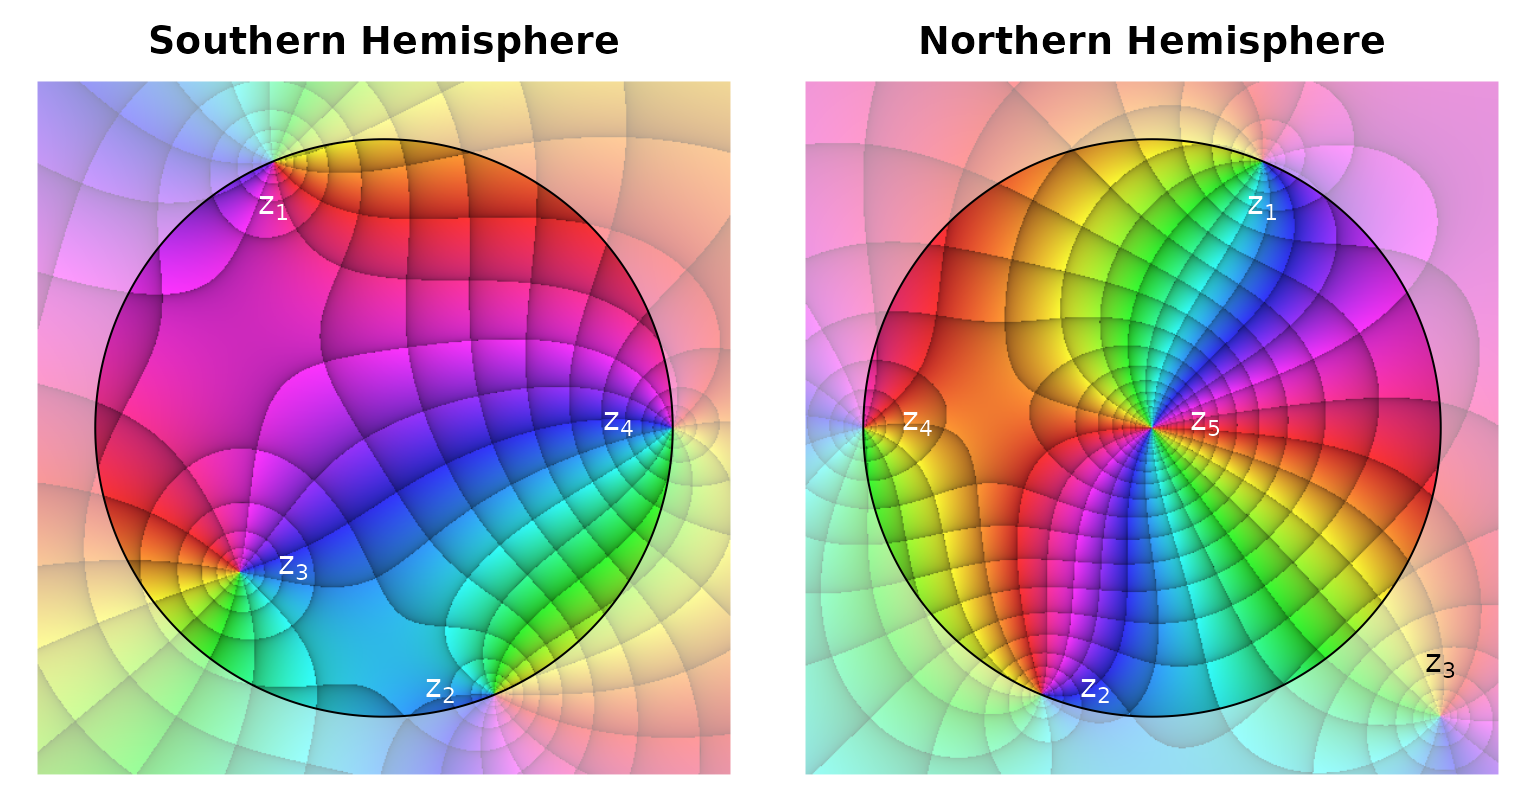 Riemann sphere plot of the function $f(z)=\frac{(z^{2}+\frac{1}{\sqrt{2}}+\frac{\mathrm{i}}{\sqrt{2}})\cdot(z+\frac{1}{2}+\frac{\mathrm{i}}{2})}{z-1}$. Annotated are the zeroes $z_1$, $z_2$, $z_3$, and the poles $z_4$, $z_5$.